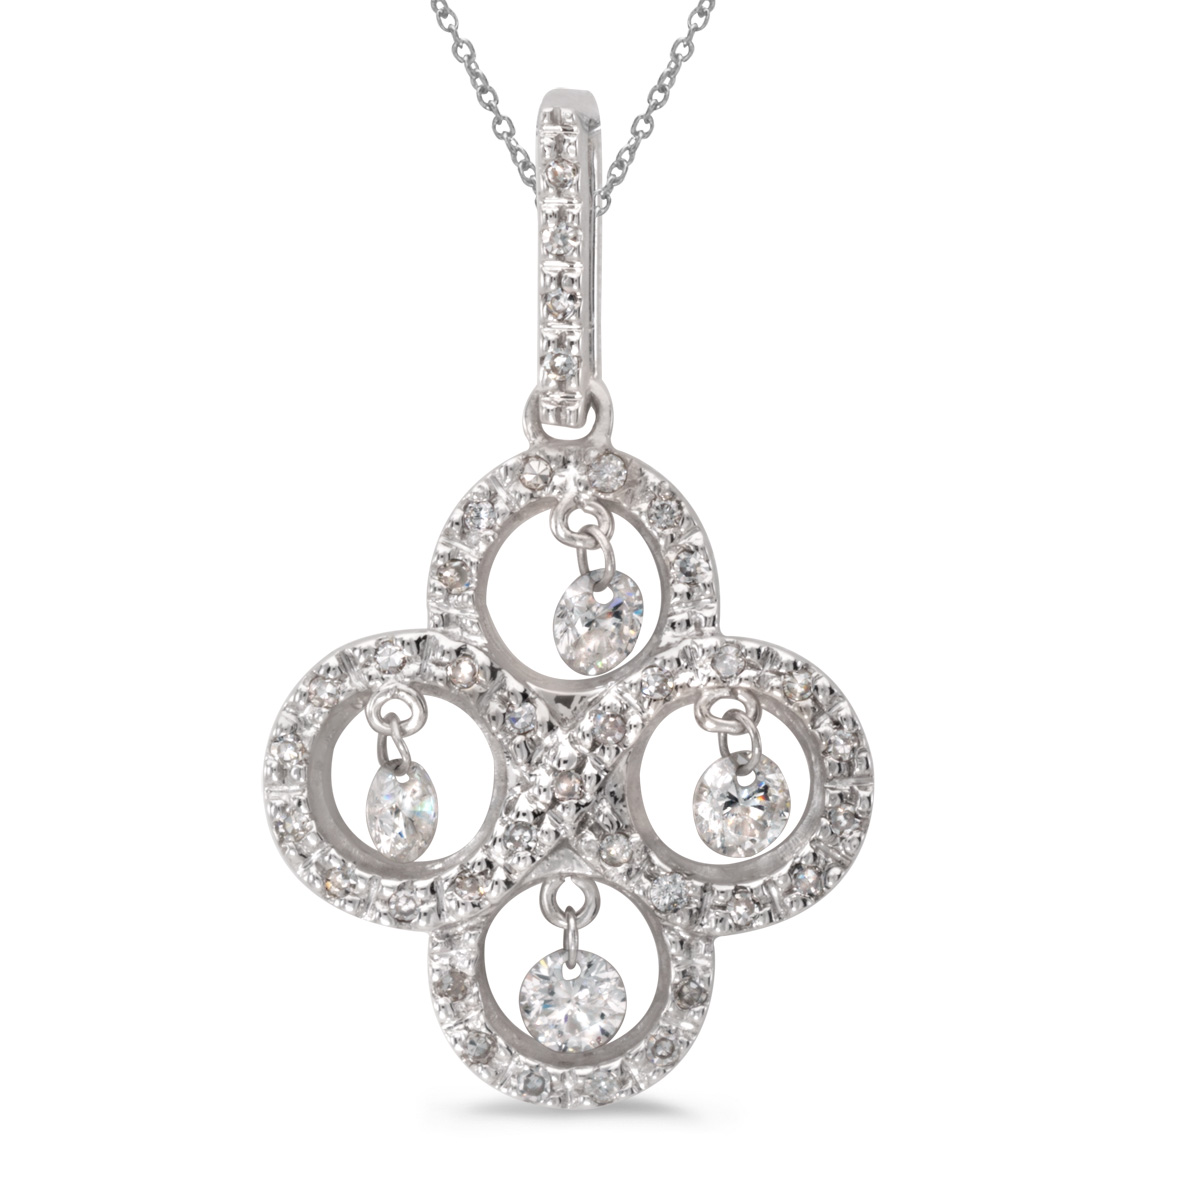 14k gold Dashinng Diamonds pendant with 0.43 total ct diamonds. The center dangling diamond dance...